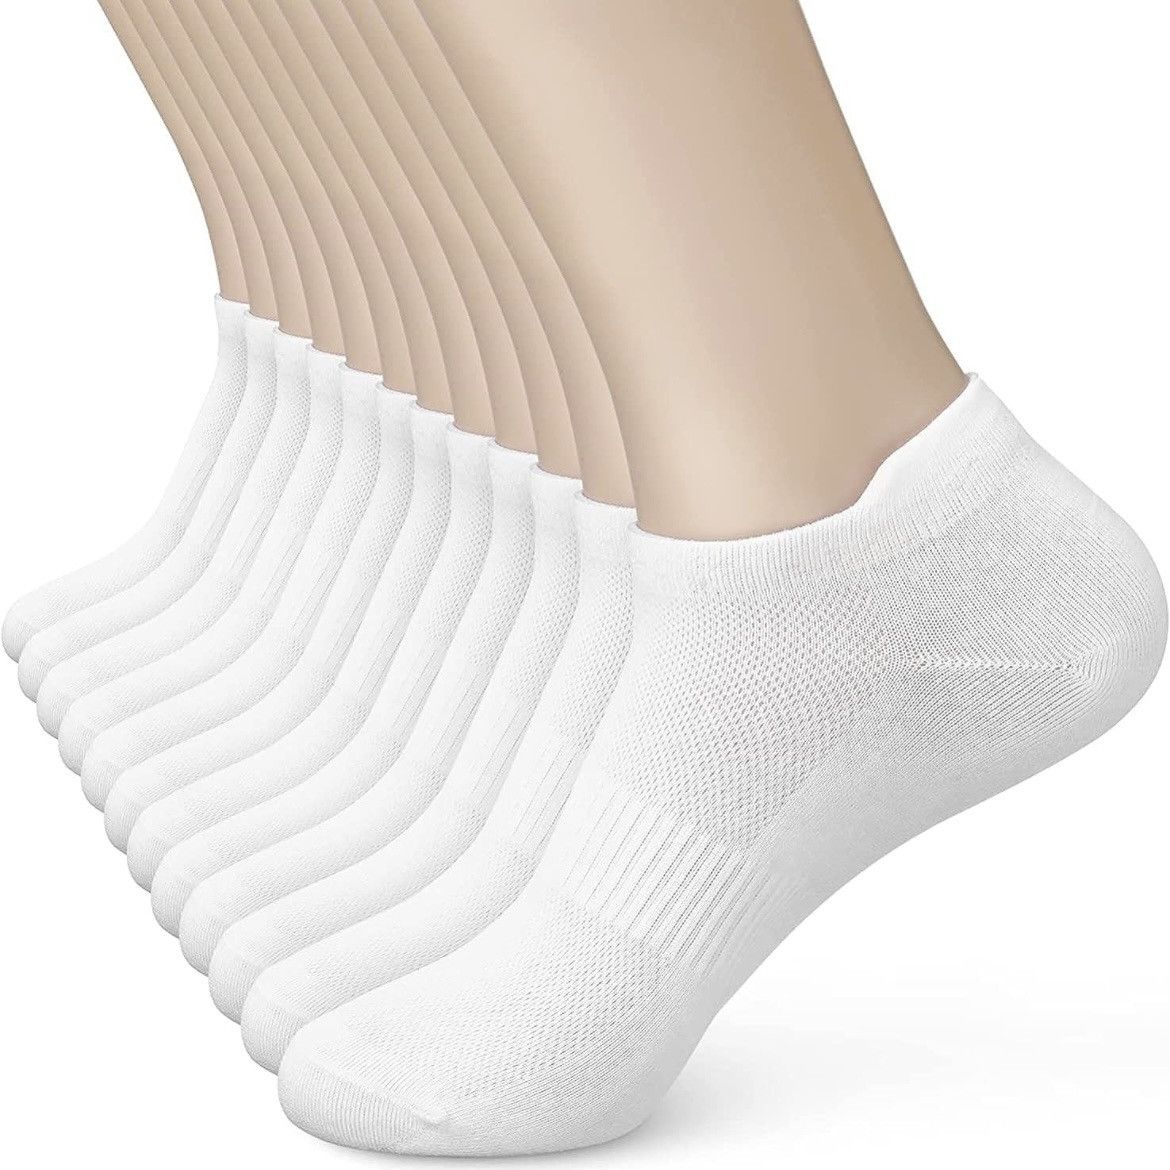 Other Compression Socks NIP 5 Pairs 15-20mmHg Large X-Large